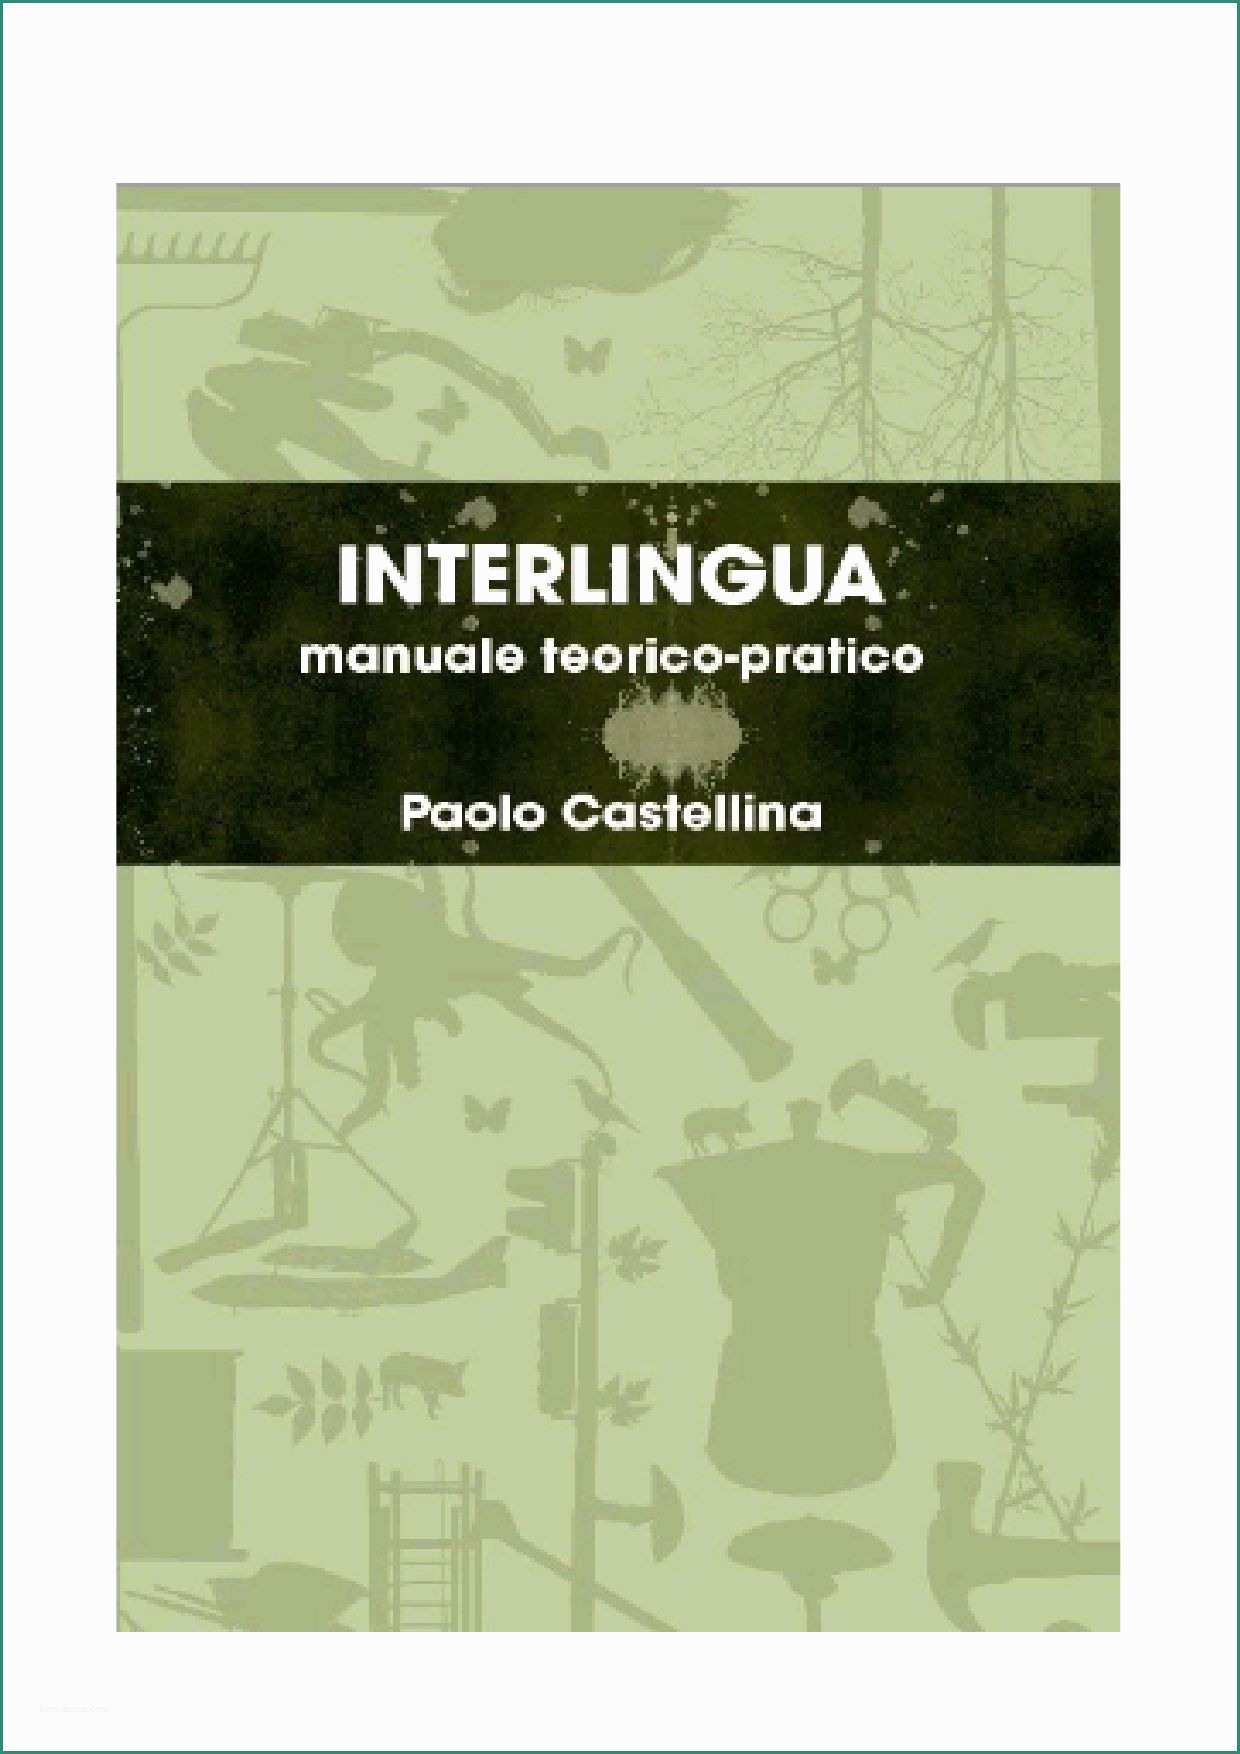 Arredo Ingross Opinioni E Interlingua by Paolo Castellina issuu